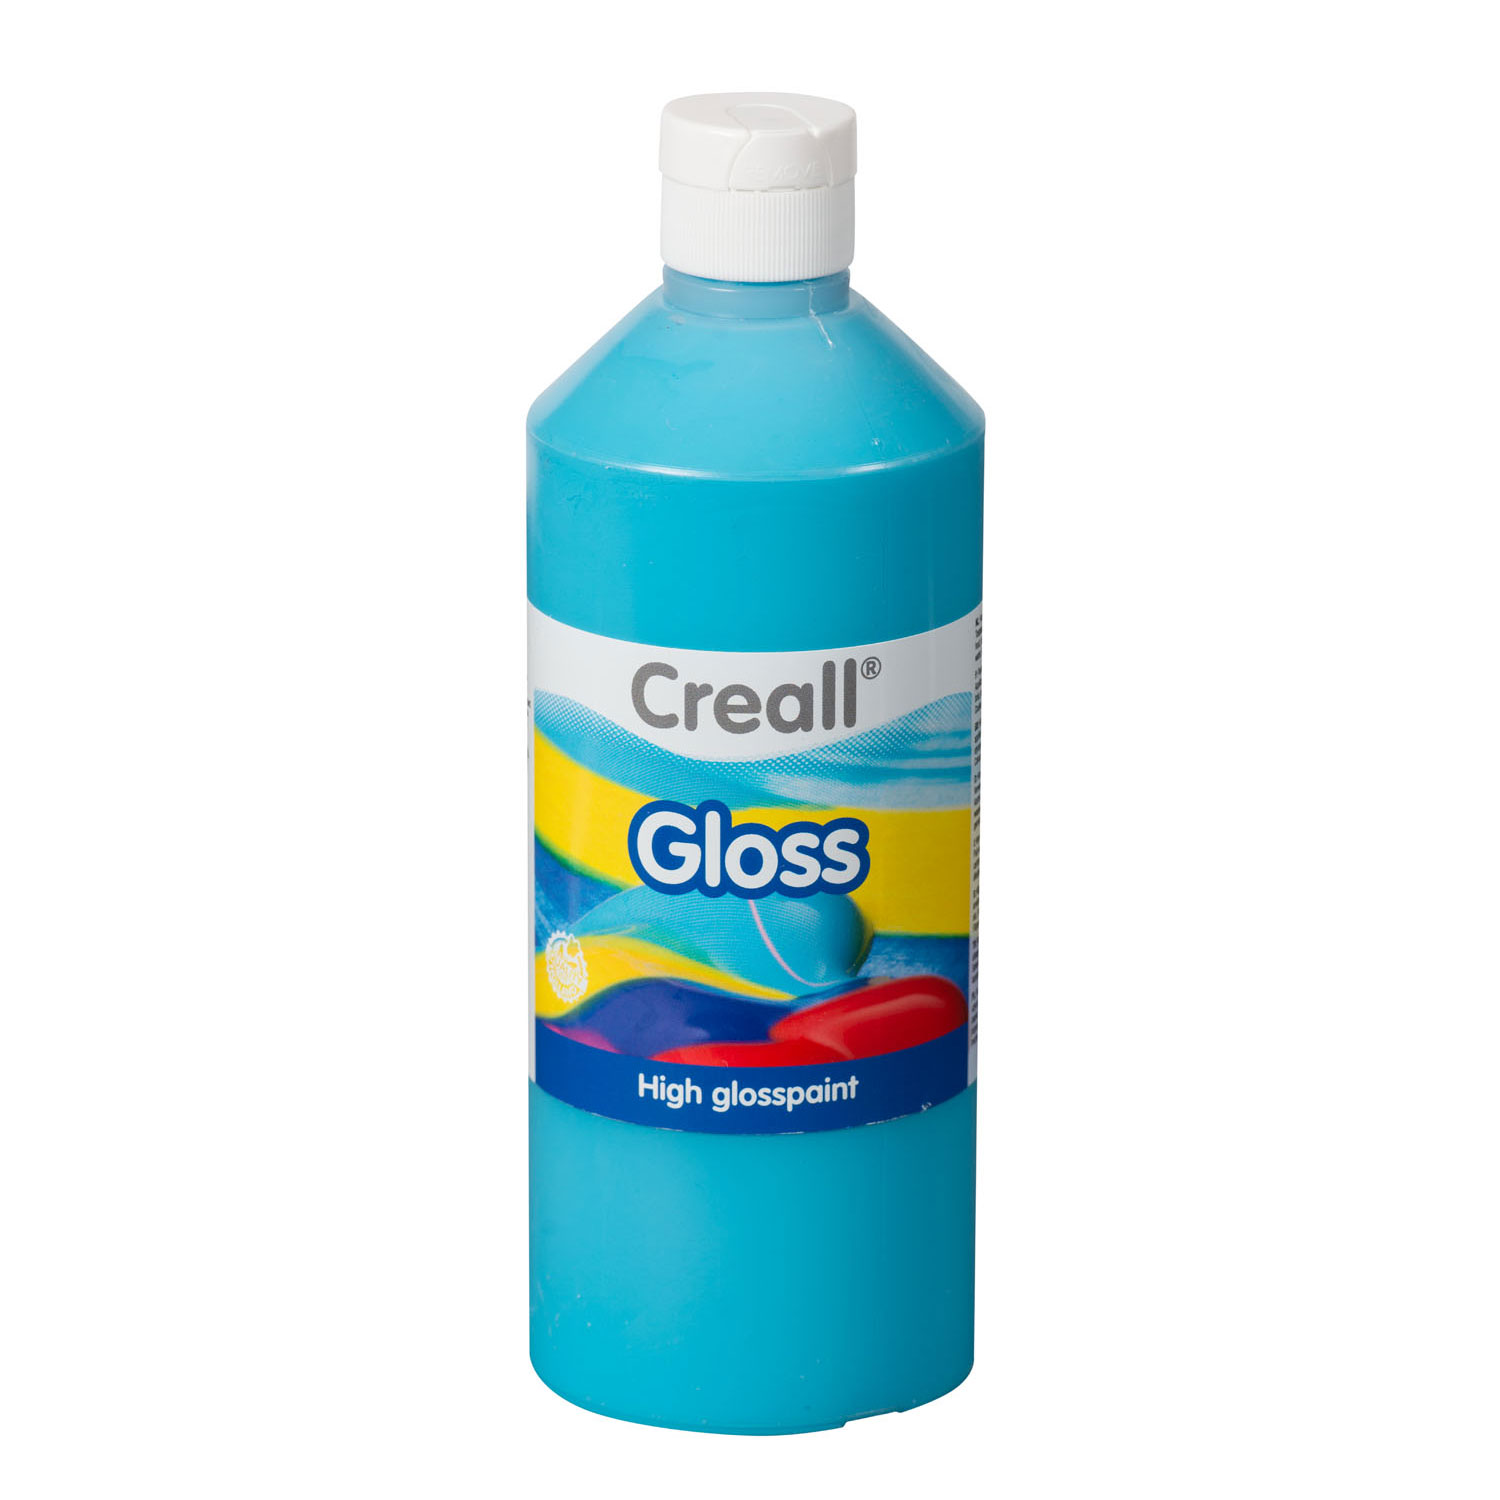 Creall Gloss Glansverf Turquoise